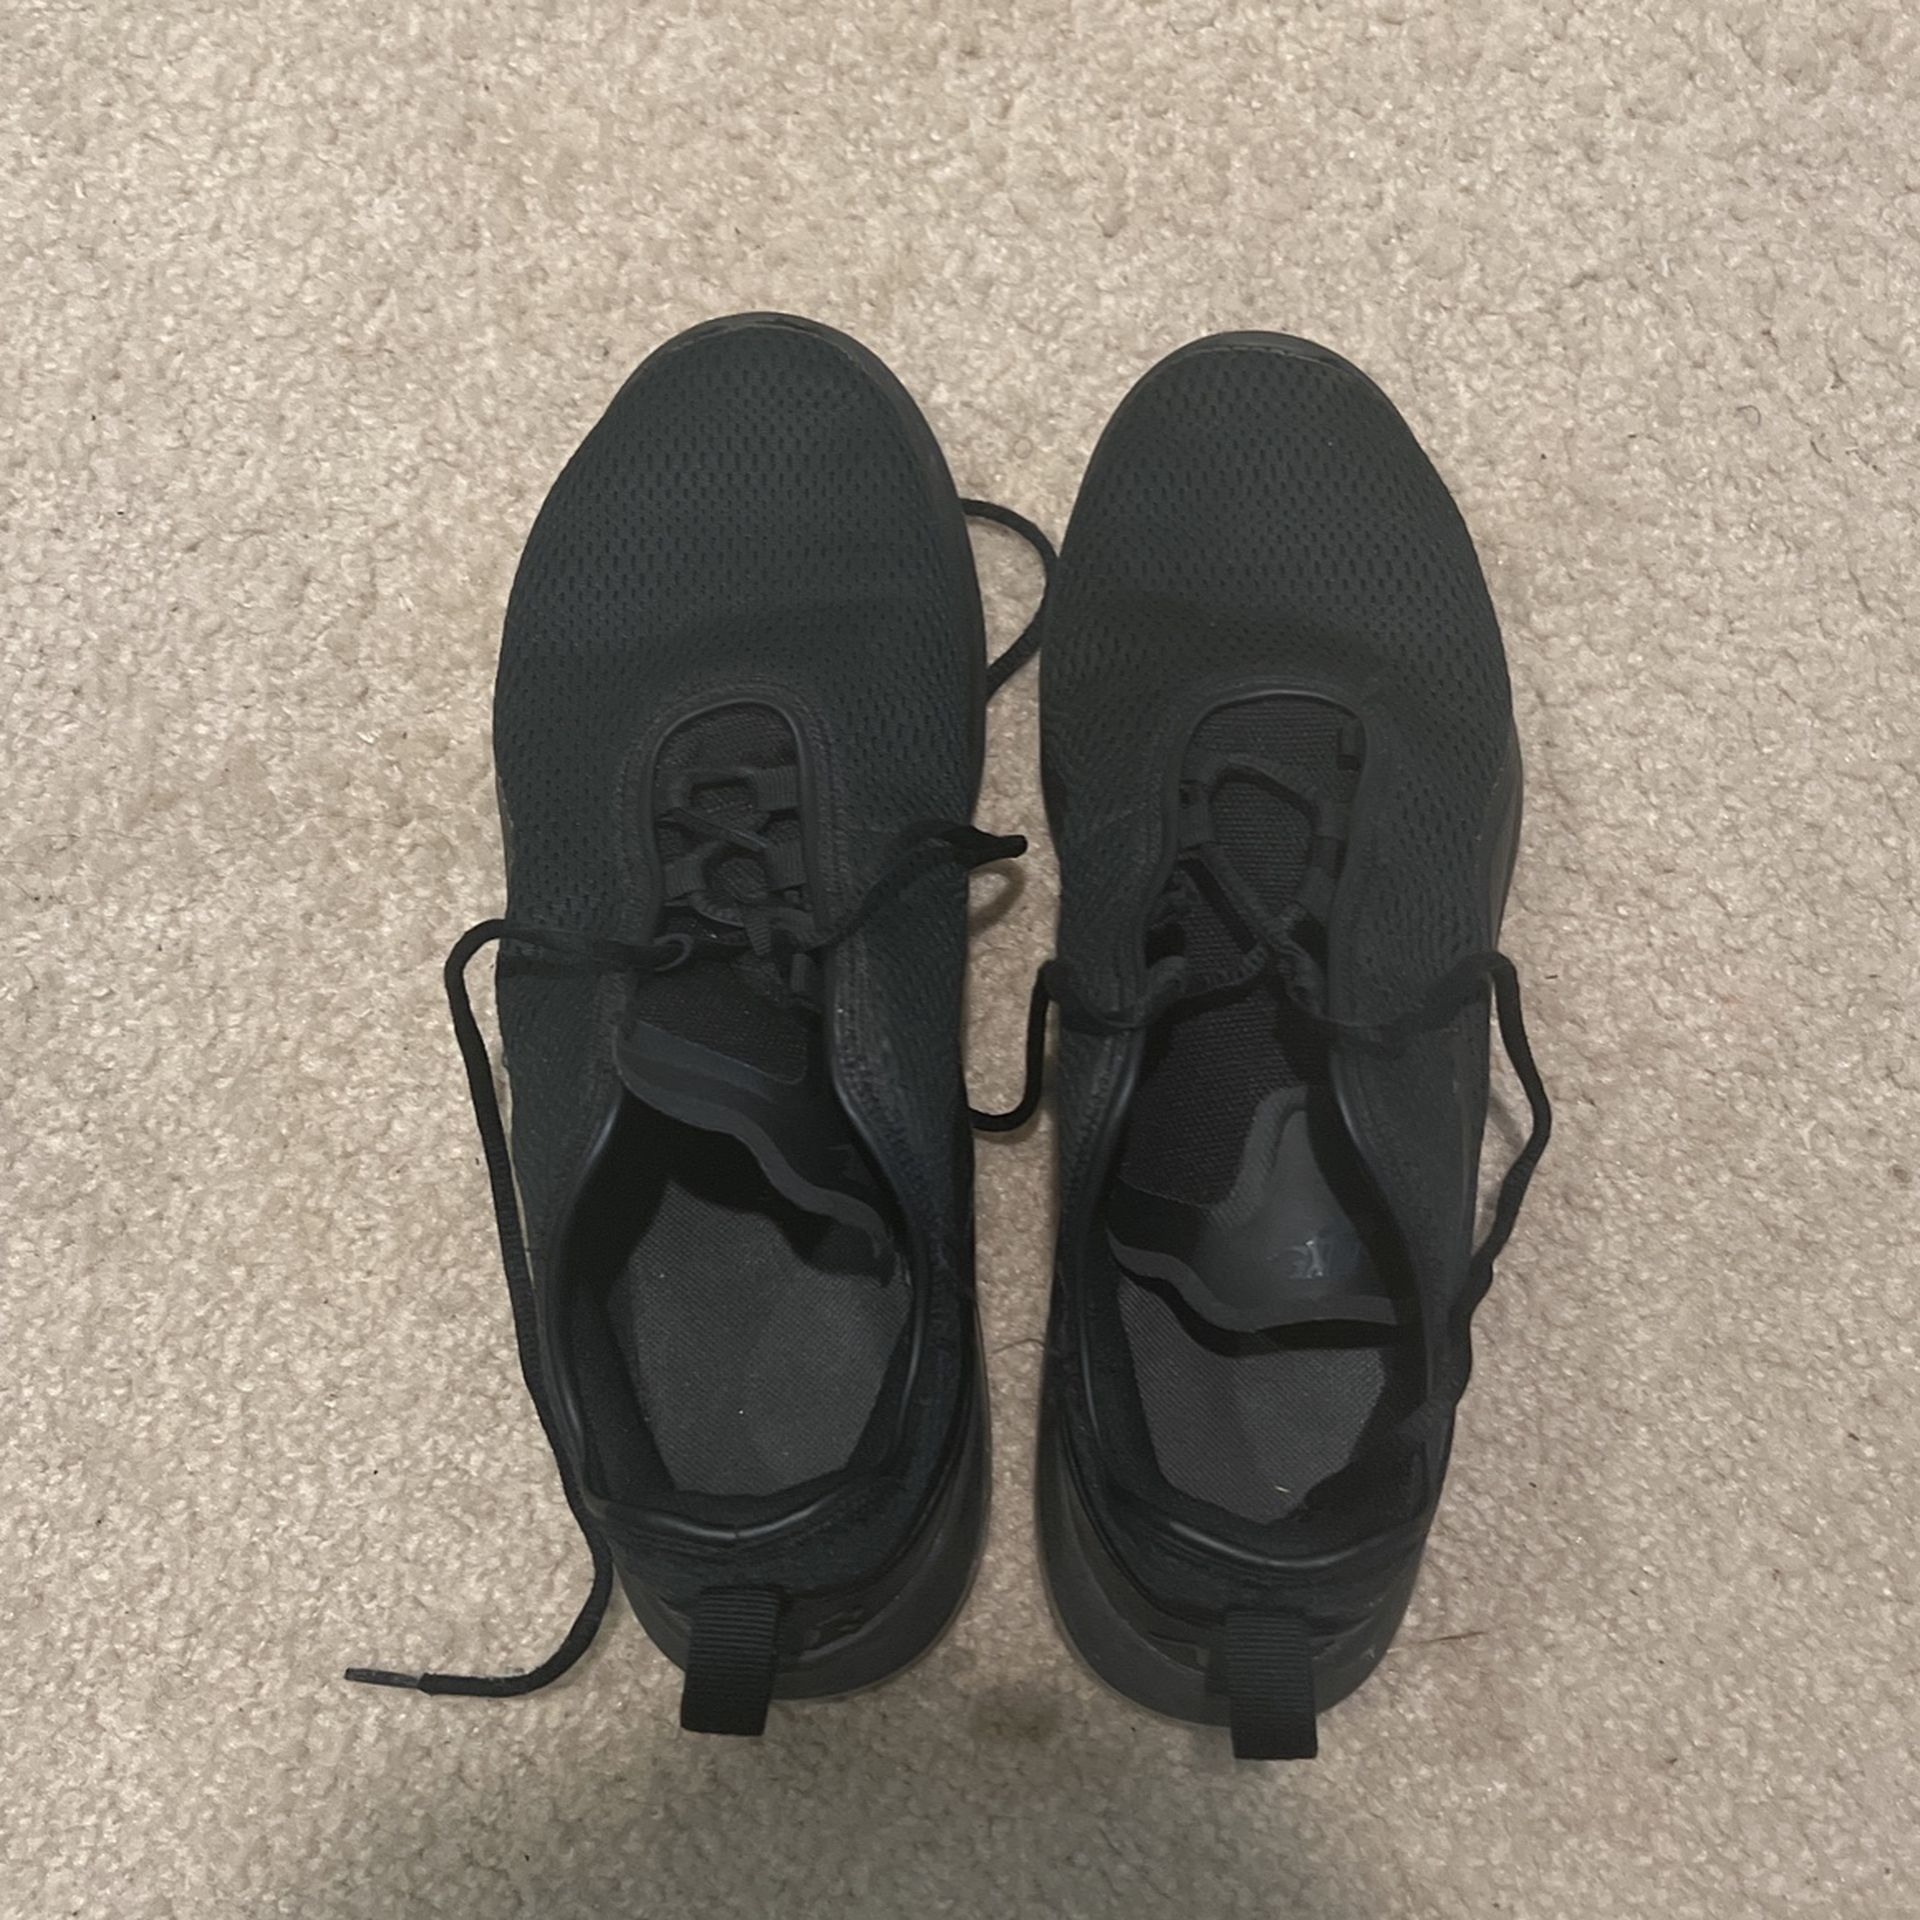 Black Nike Shoes Size 12